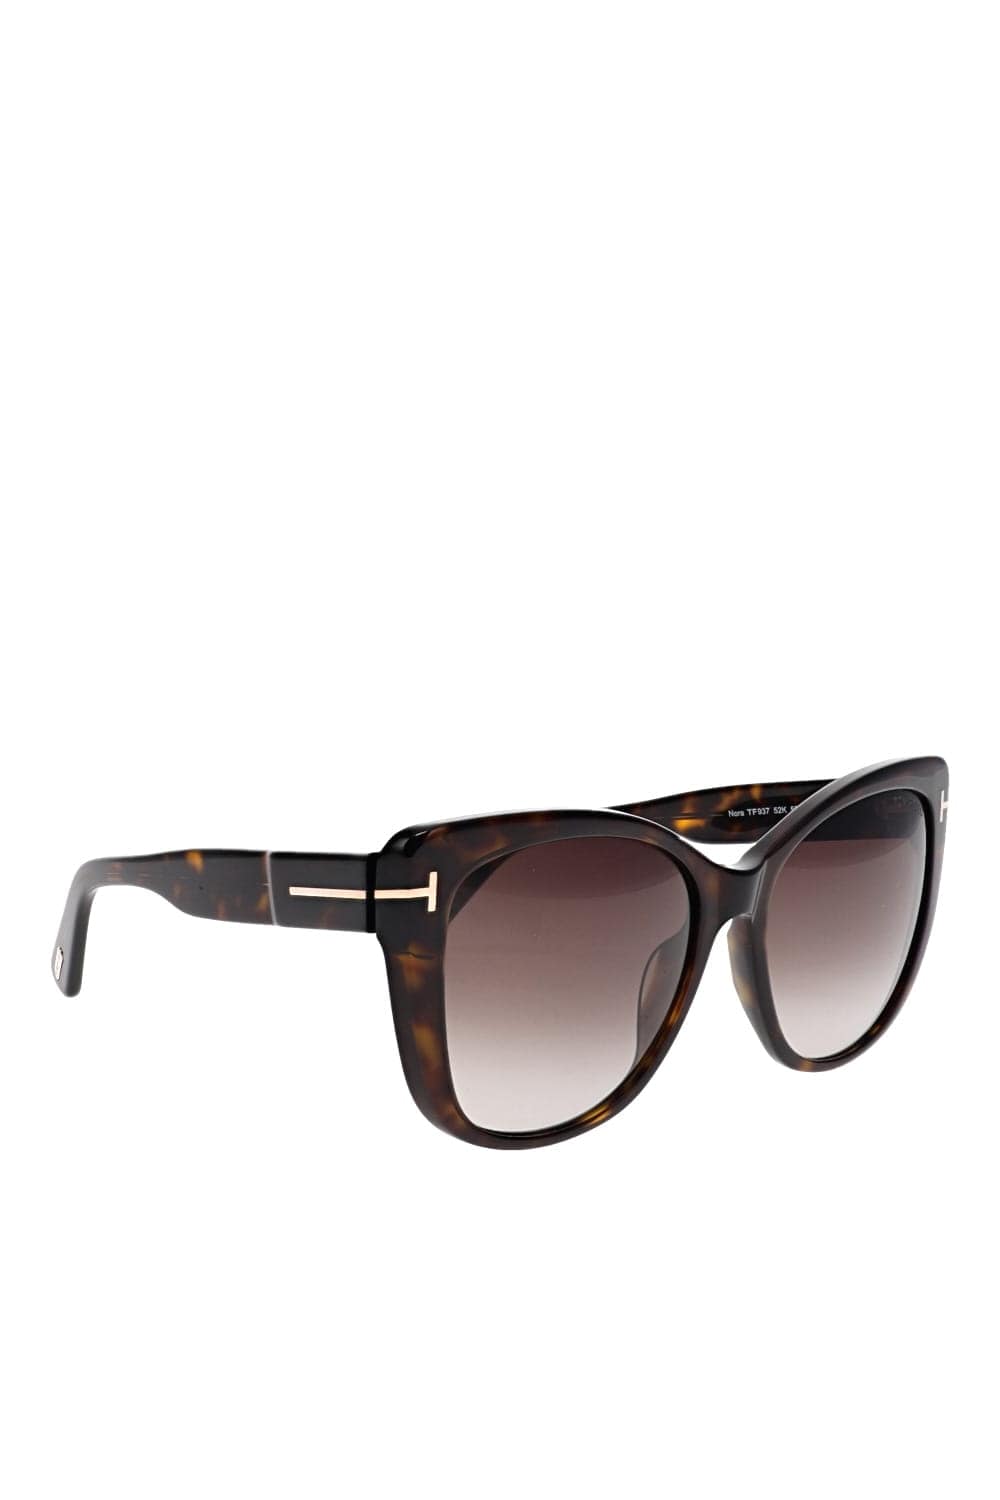 Serengeti Havah Sunglasses -SS574001, SS574002, SS574003, SS574004,  SS562005, SS574006 - Flight Sunglasses